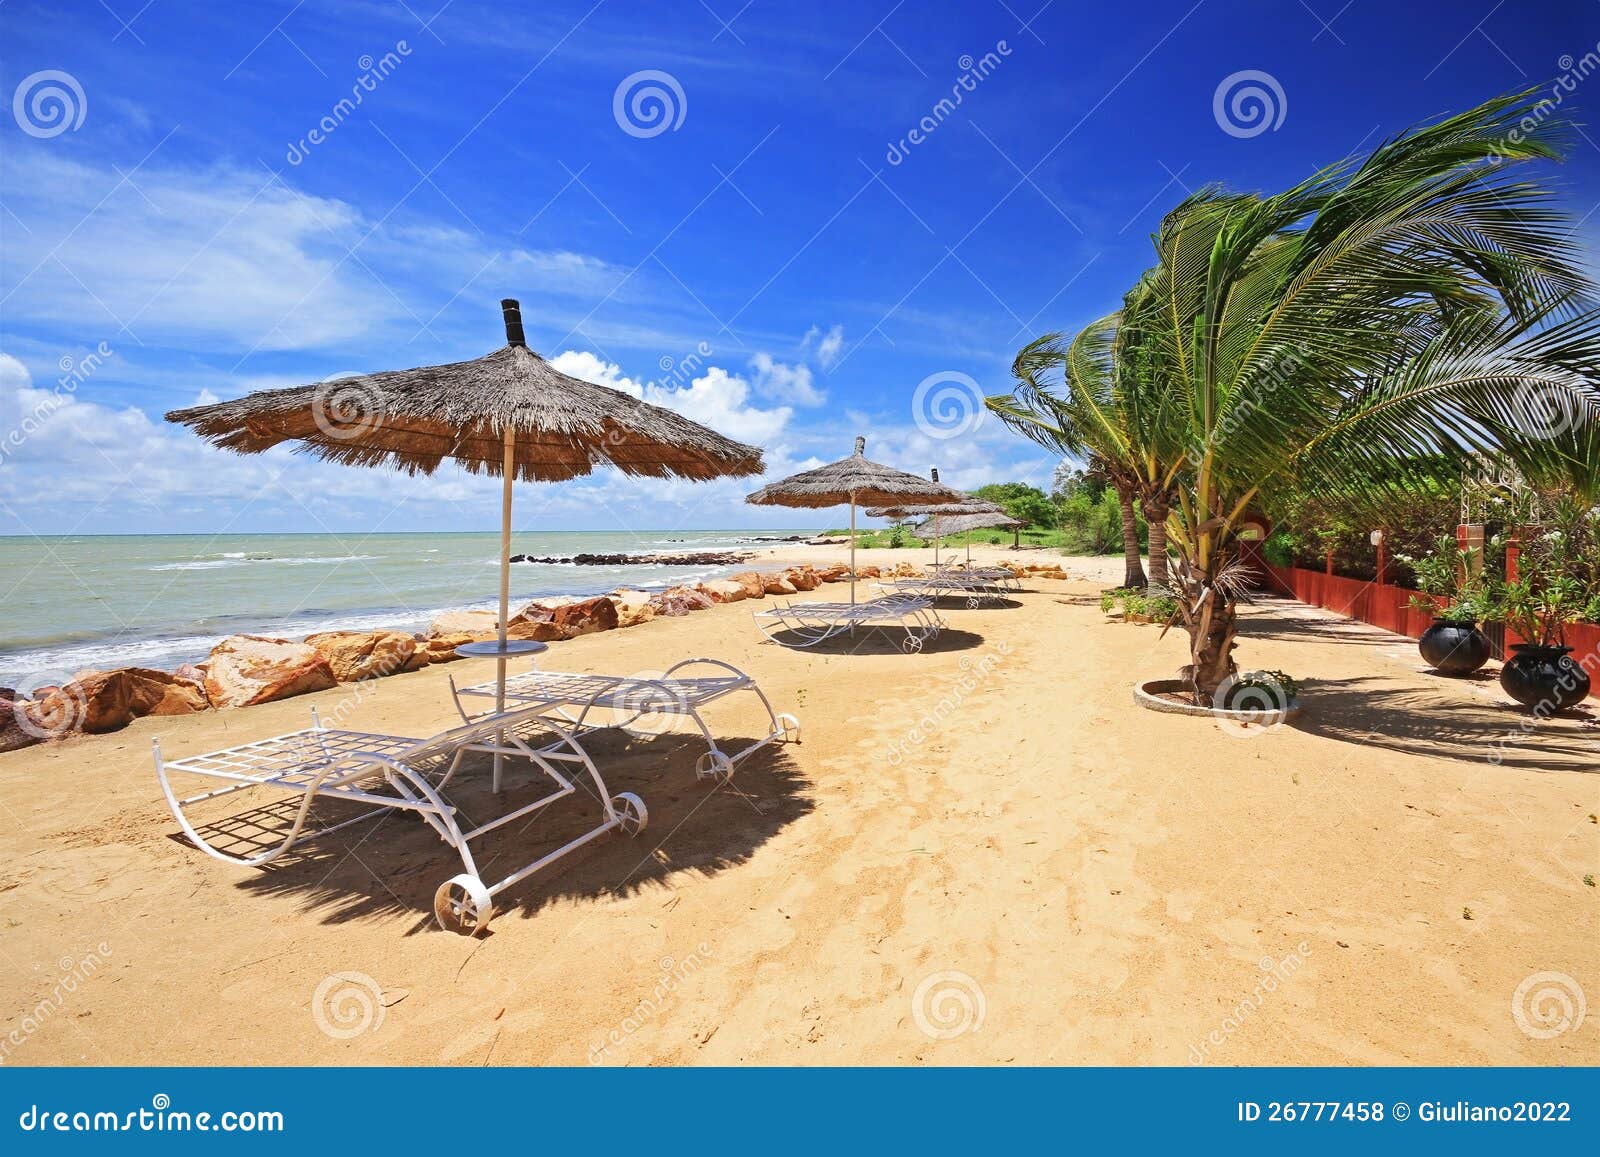 saly's beach in senegal